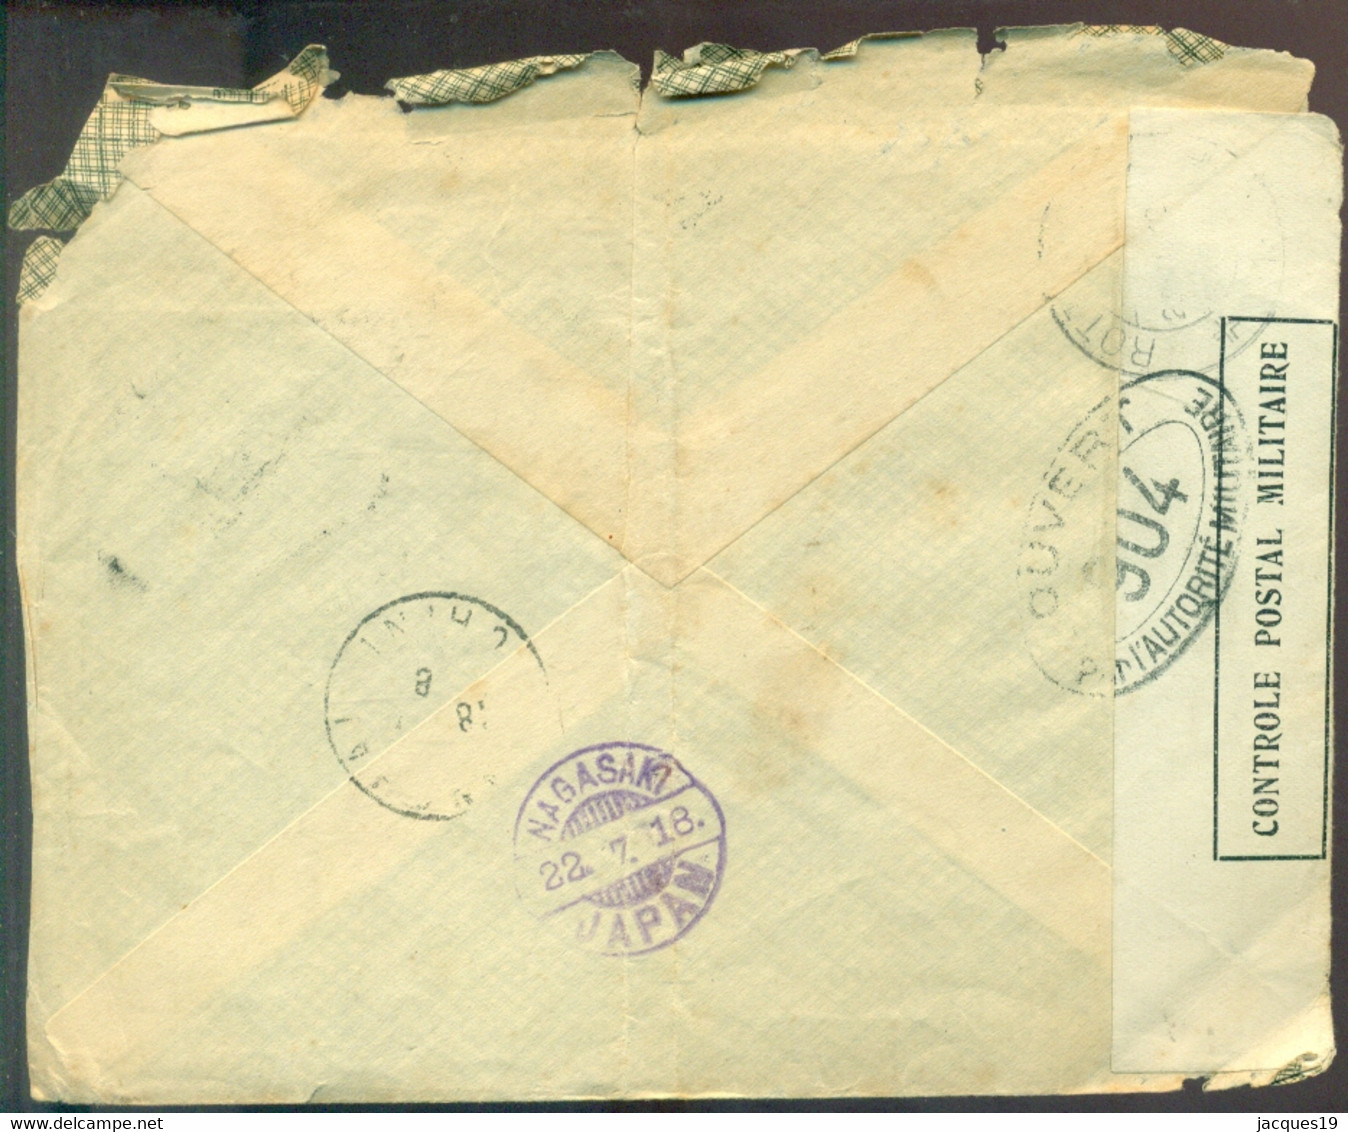 China 1918 Aangetekende Brief Van Banque Belge Pour L'Etranger Van China Via Yokohama En Nagasaki Naar Rotterdam - Covers & Documents